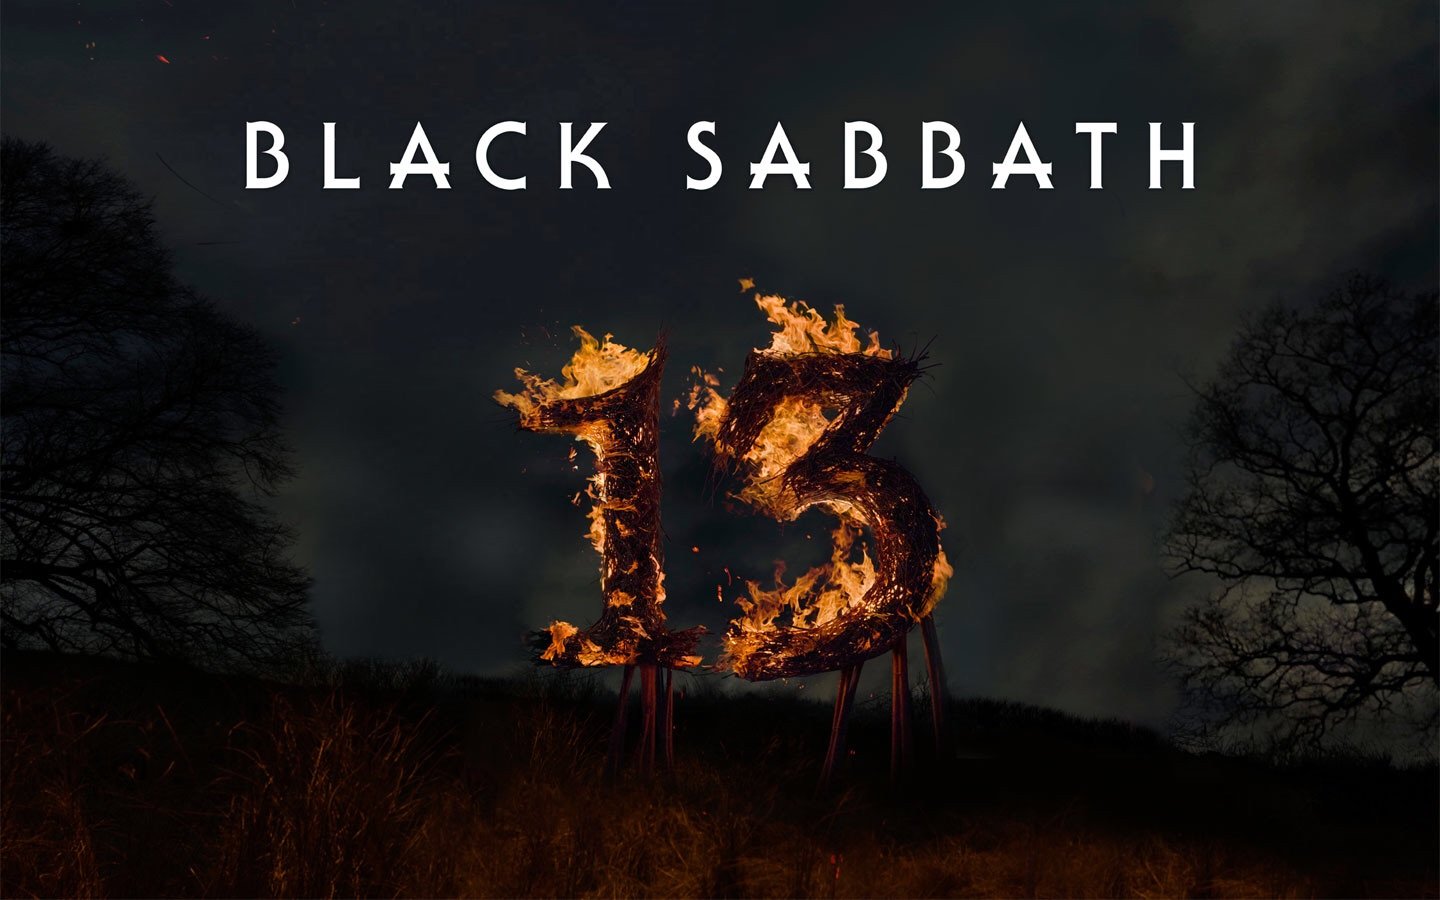  Black  Sabbath  wallpapers  HD  for desktop backgrounds 